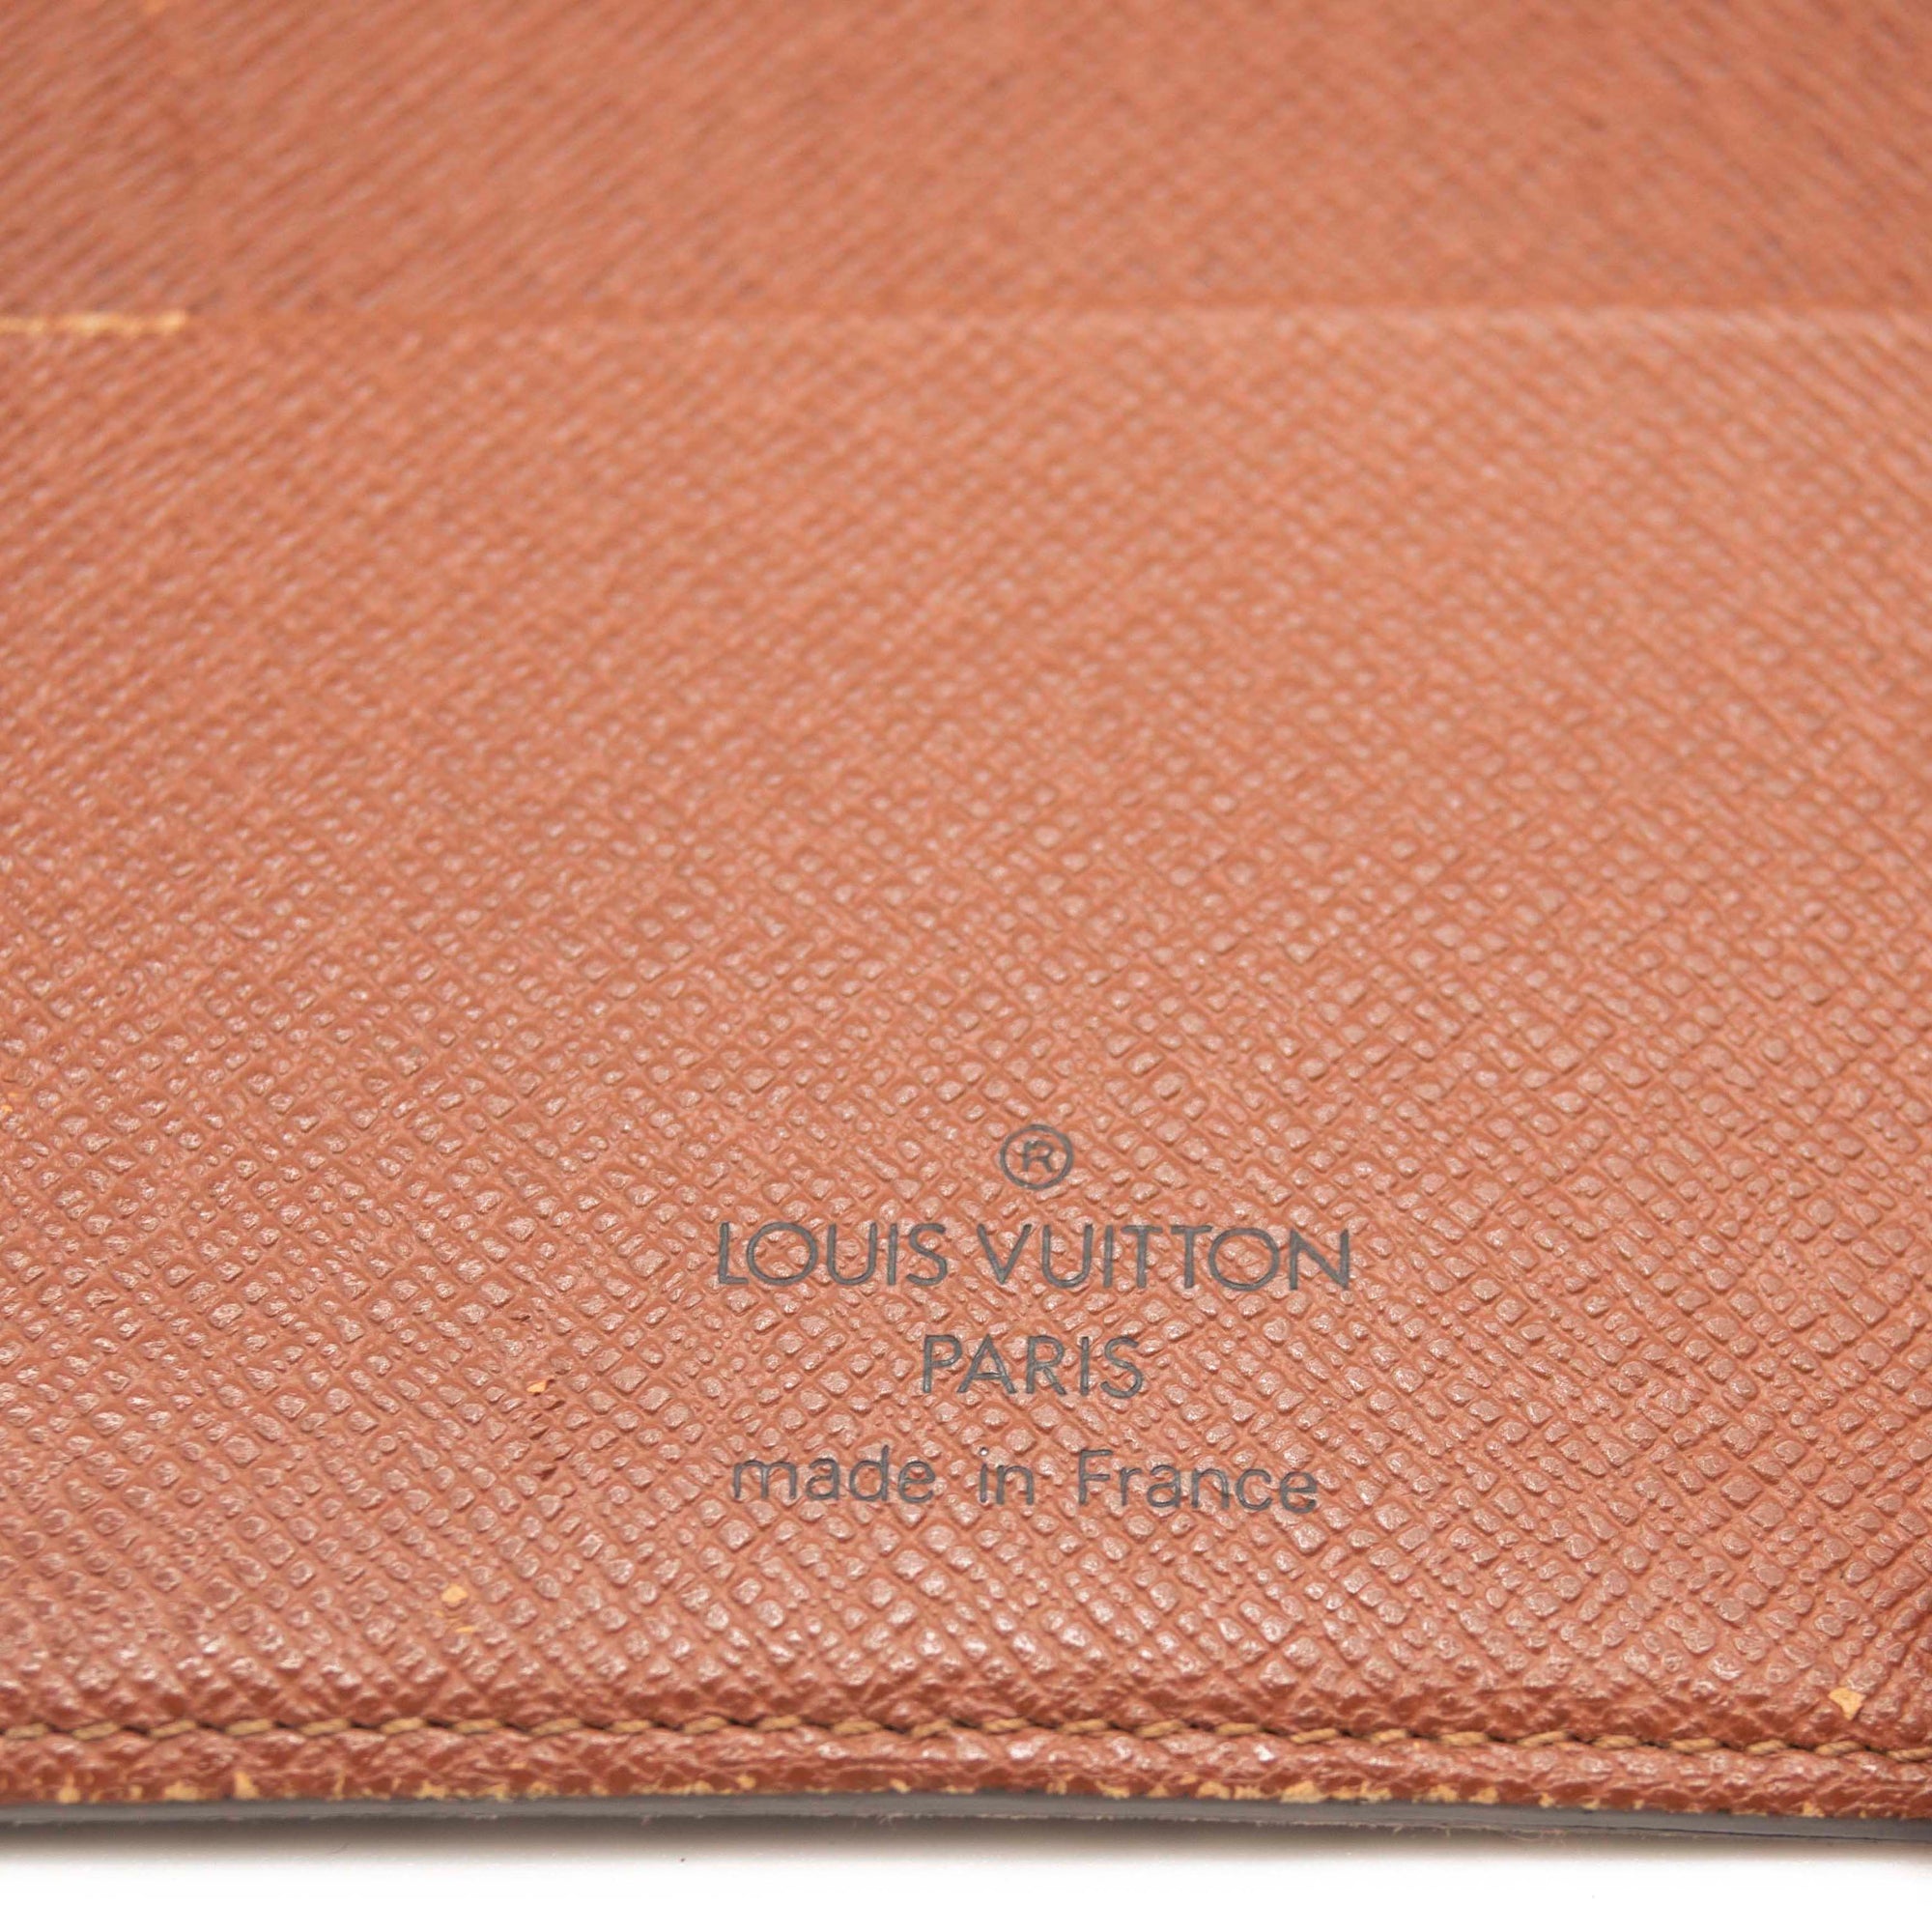 Louis Vuitton Monogram Medium Agenda, insides.. I use it as…